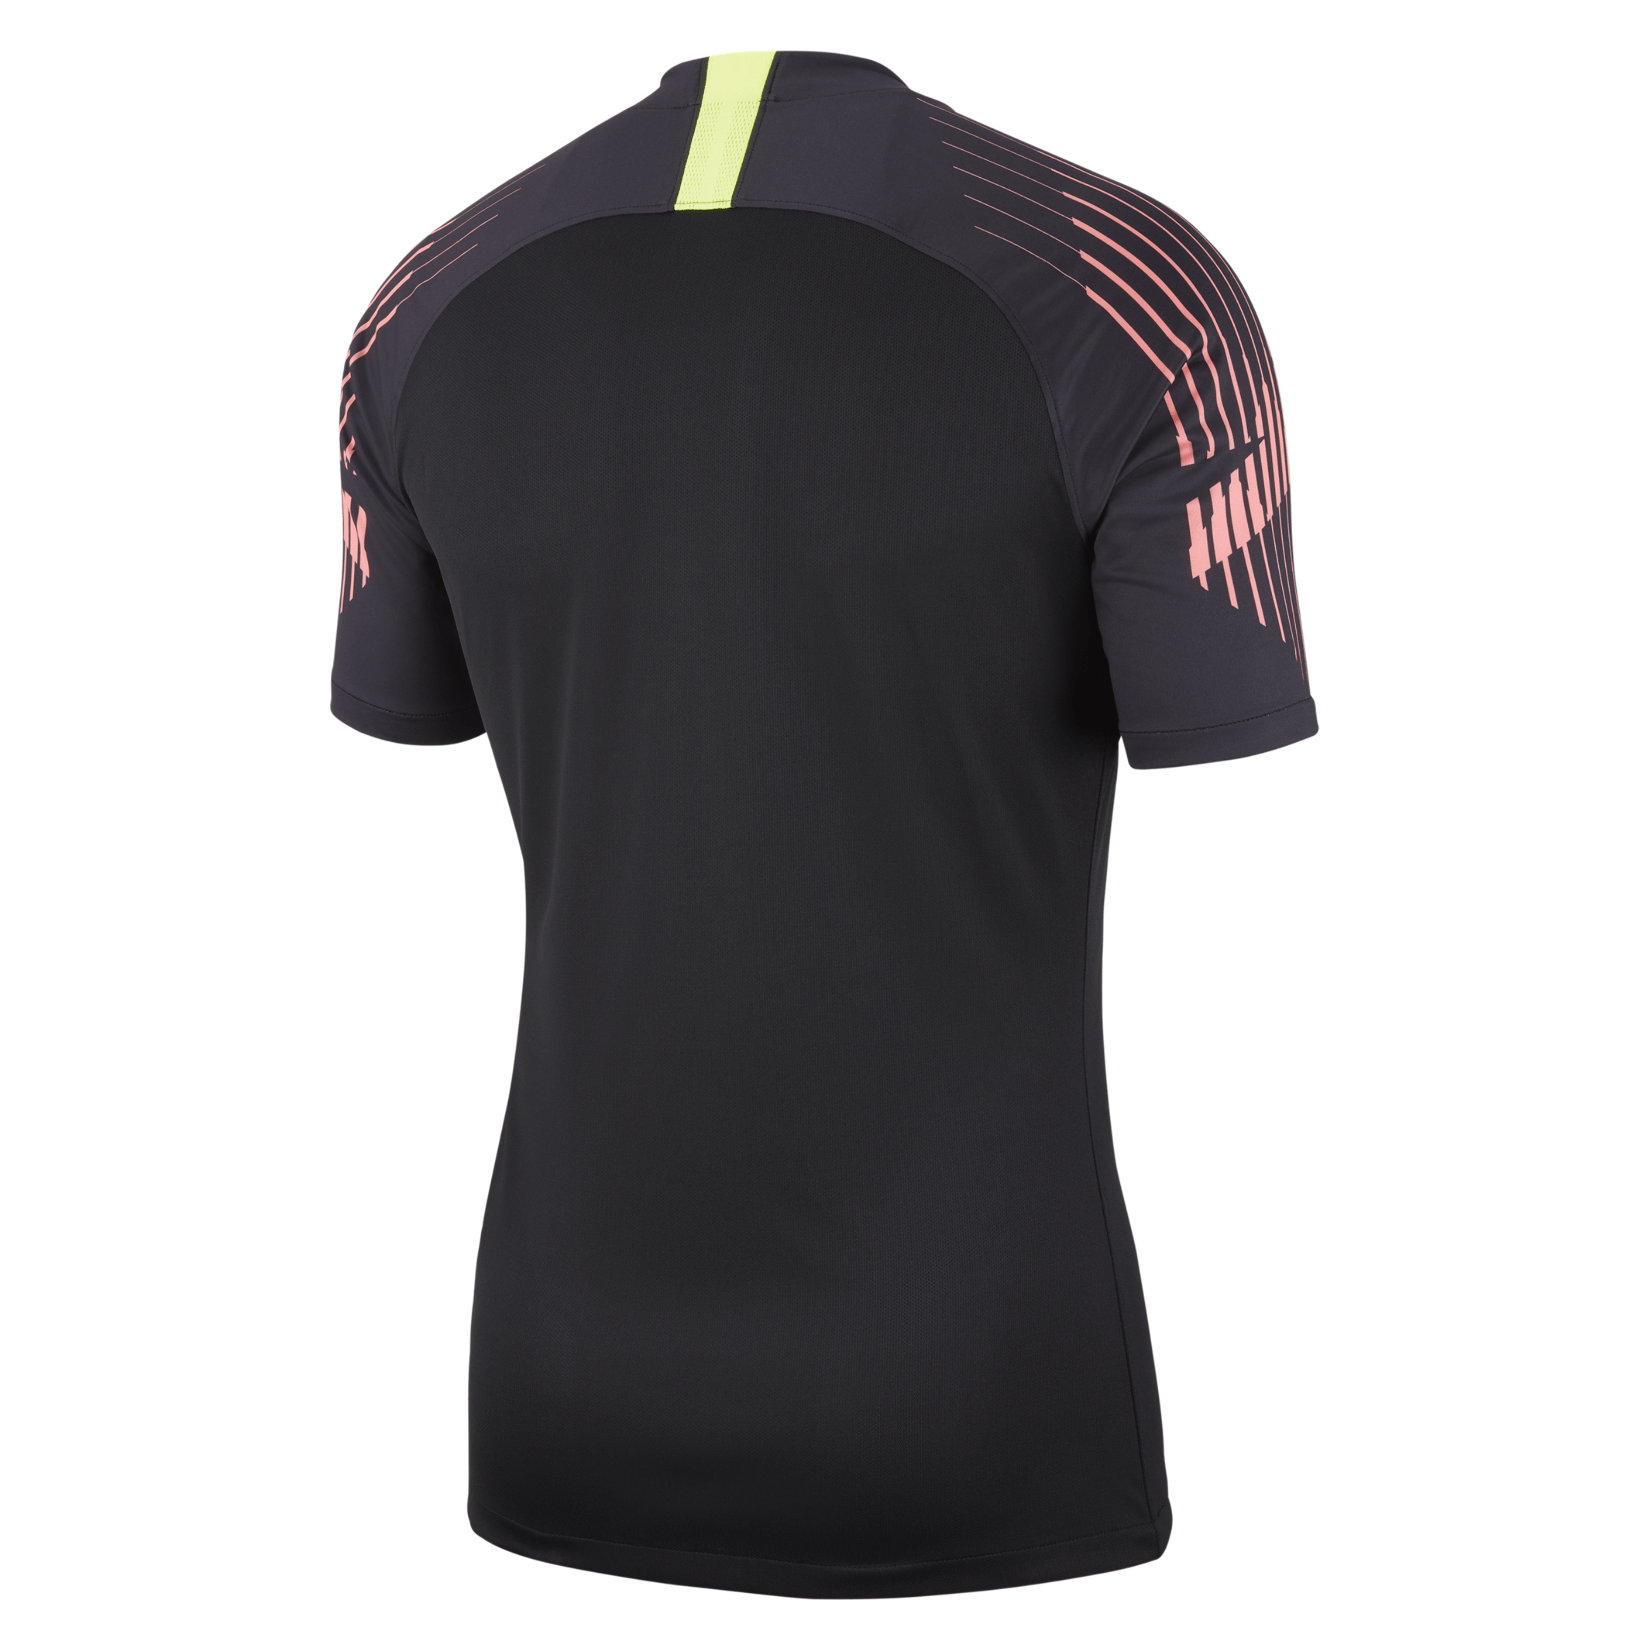 Nike Gardien Short Sleeve Goalkeeper Shirt - Kitlocker.com